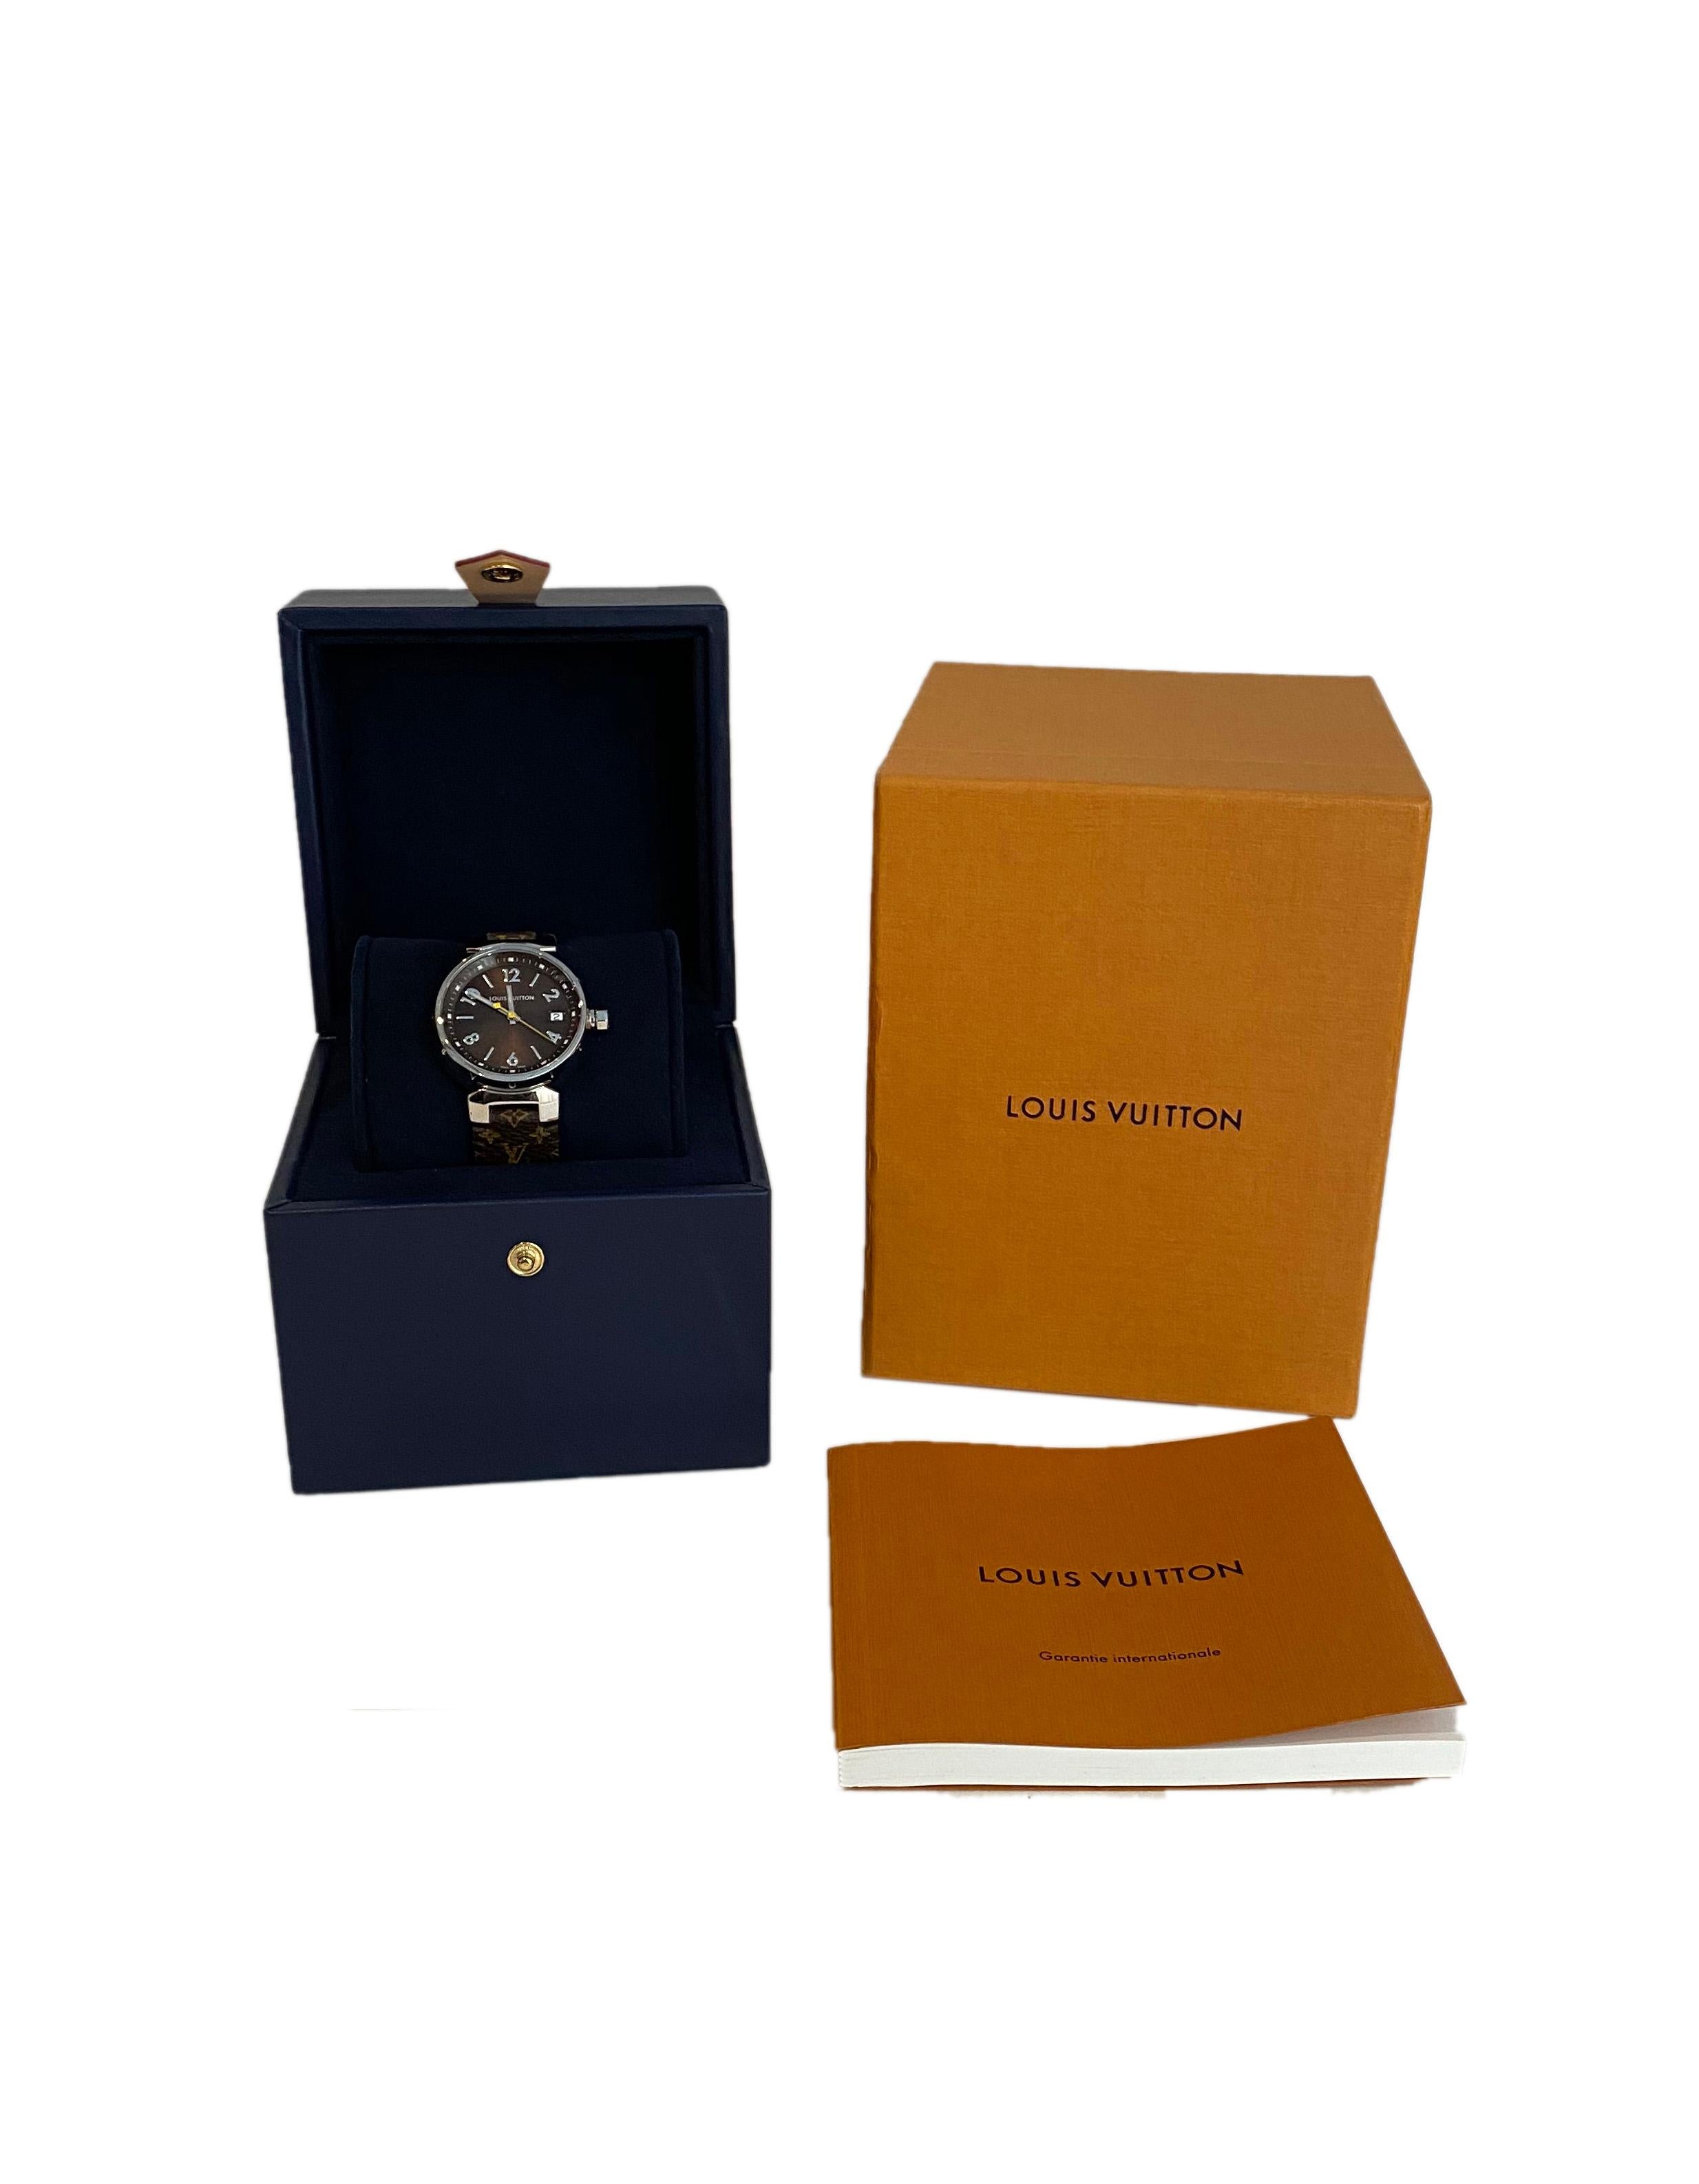 Women's Louis Vuitton Monogram Montre Quartz Watch w/ Box & Guarantee rt. $2, 900